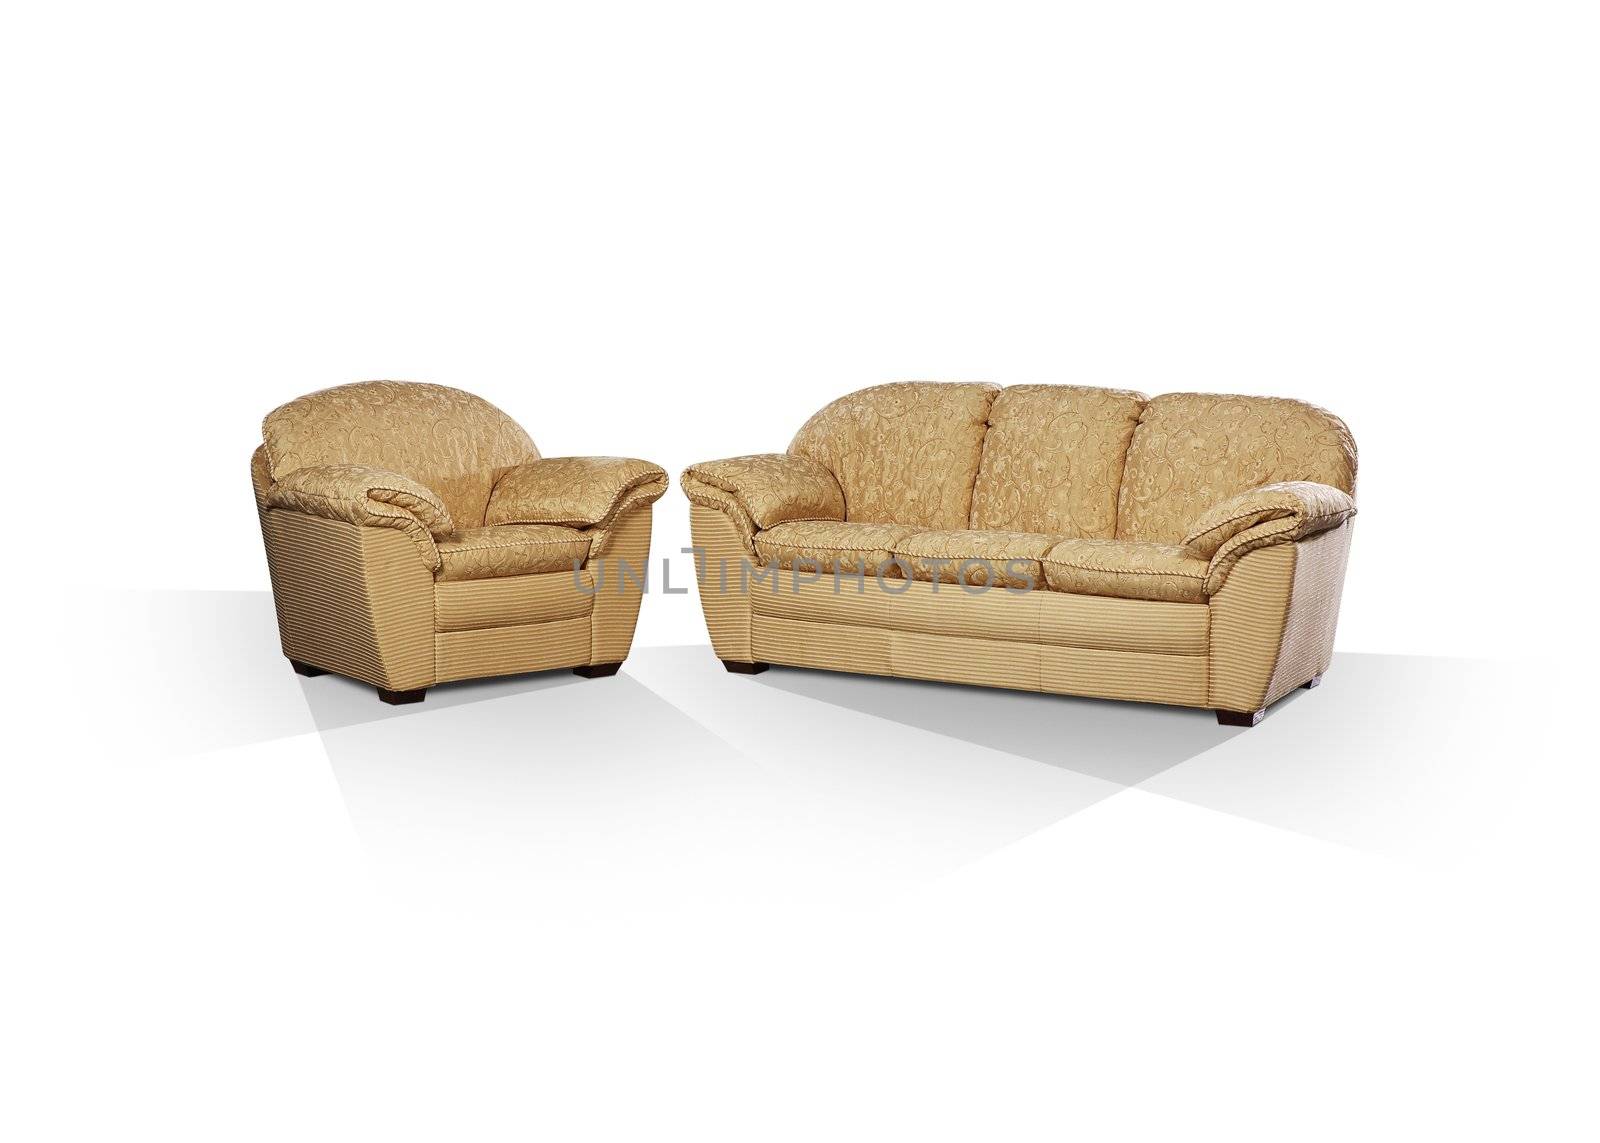 sofa & arm chair by dyoma